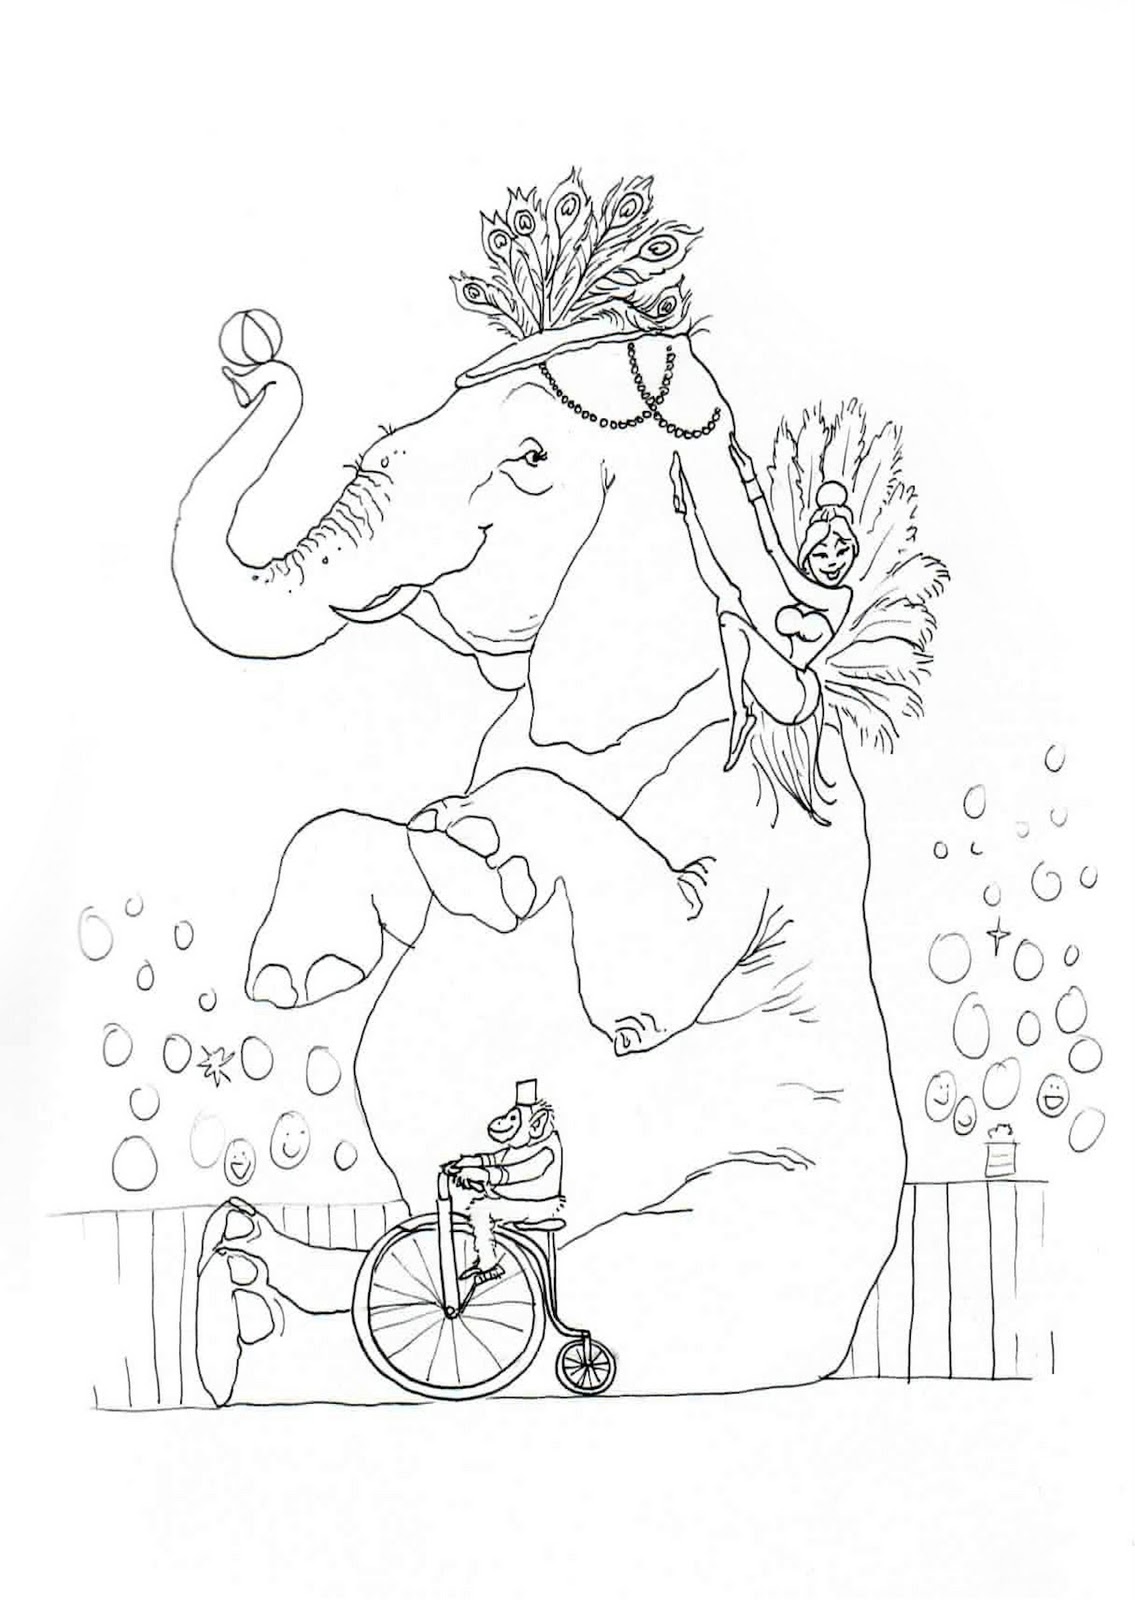 coloring circus elephant waldo printable where illustrations hilary knight animals wally illustration animal template sketch